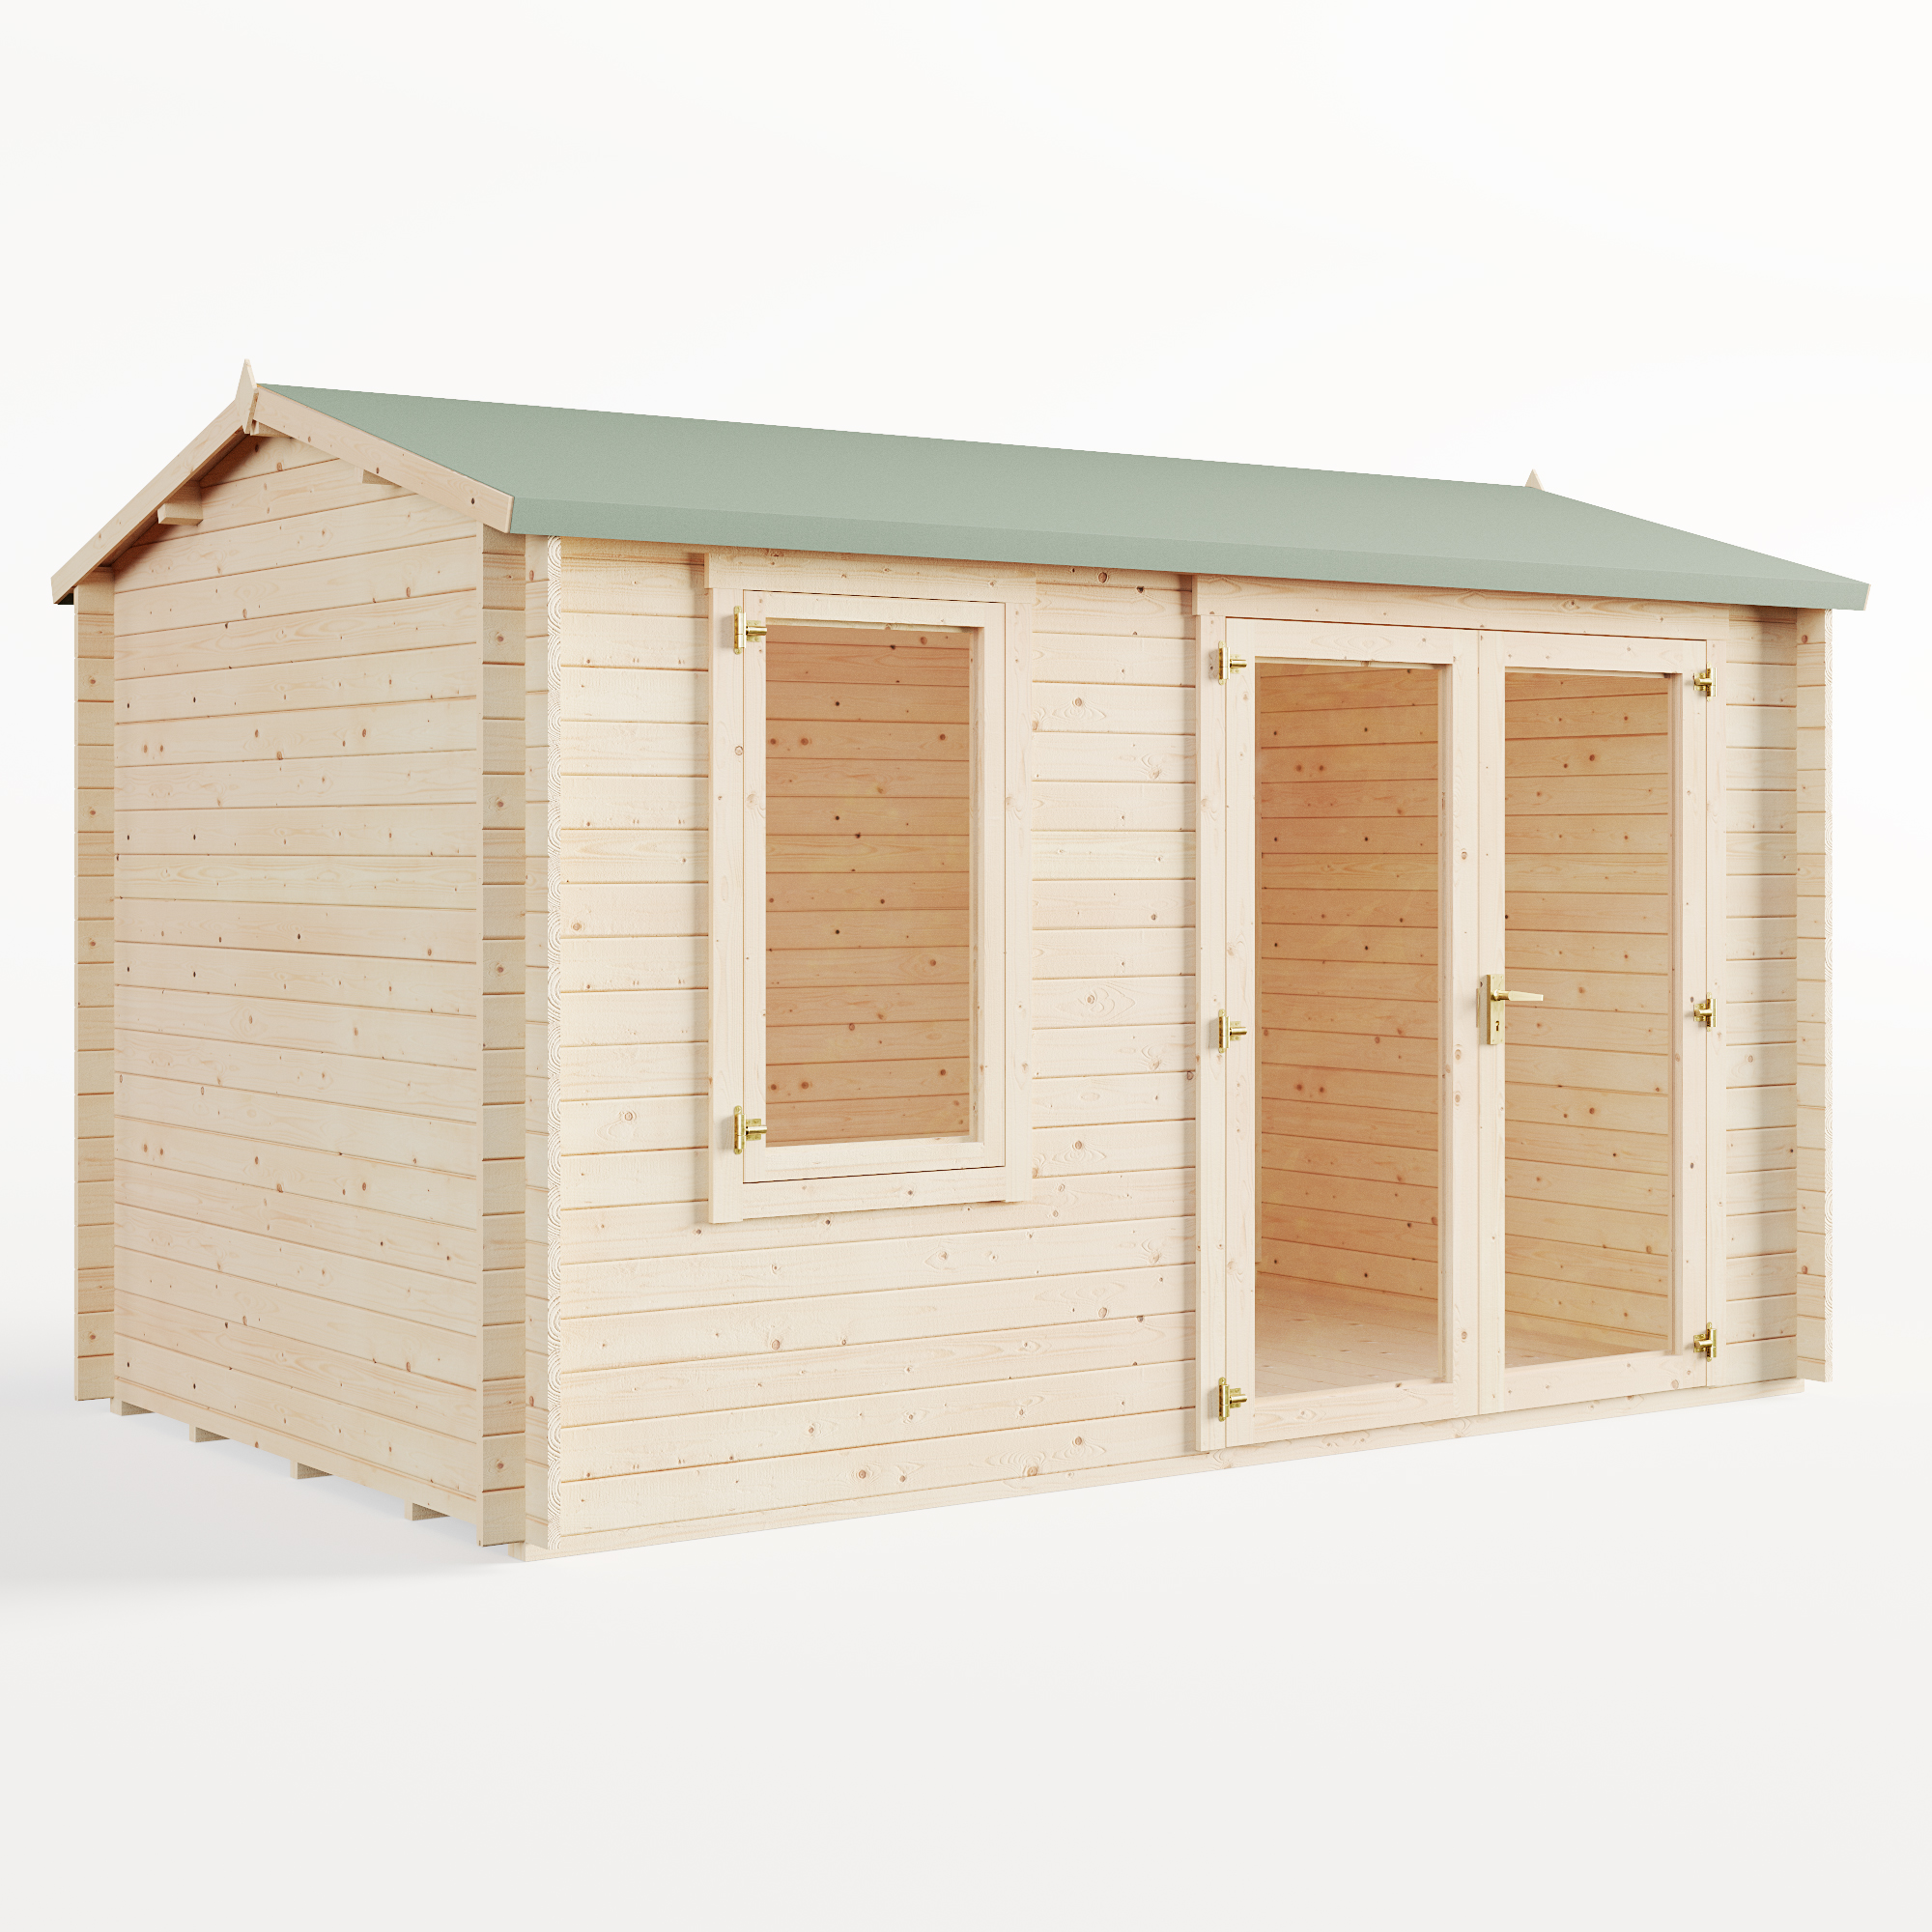 4.0m x 2.5m Pressure Treated Log Cabin - BillyOh Devon Log Cabin - 28mm Tongue & Groove Wooden Garden Building